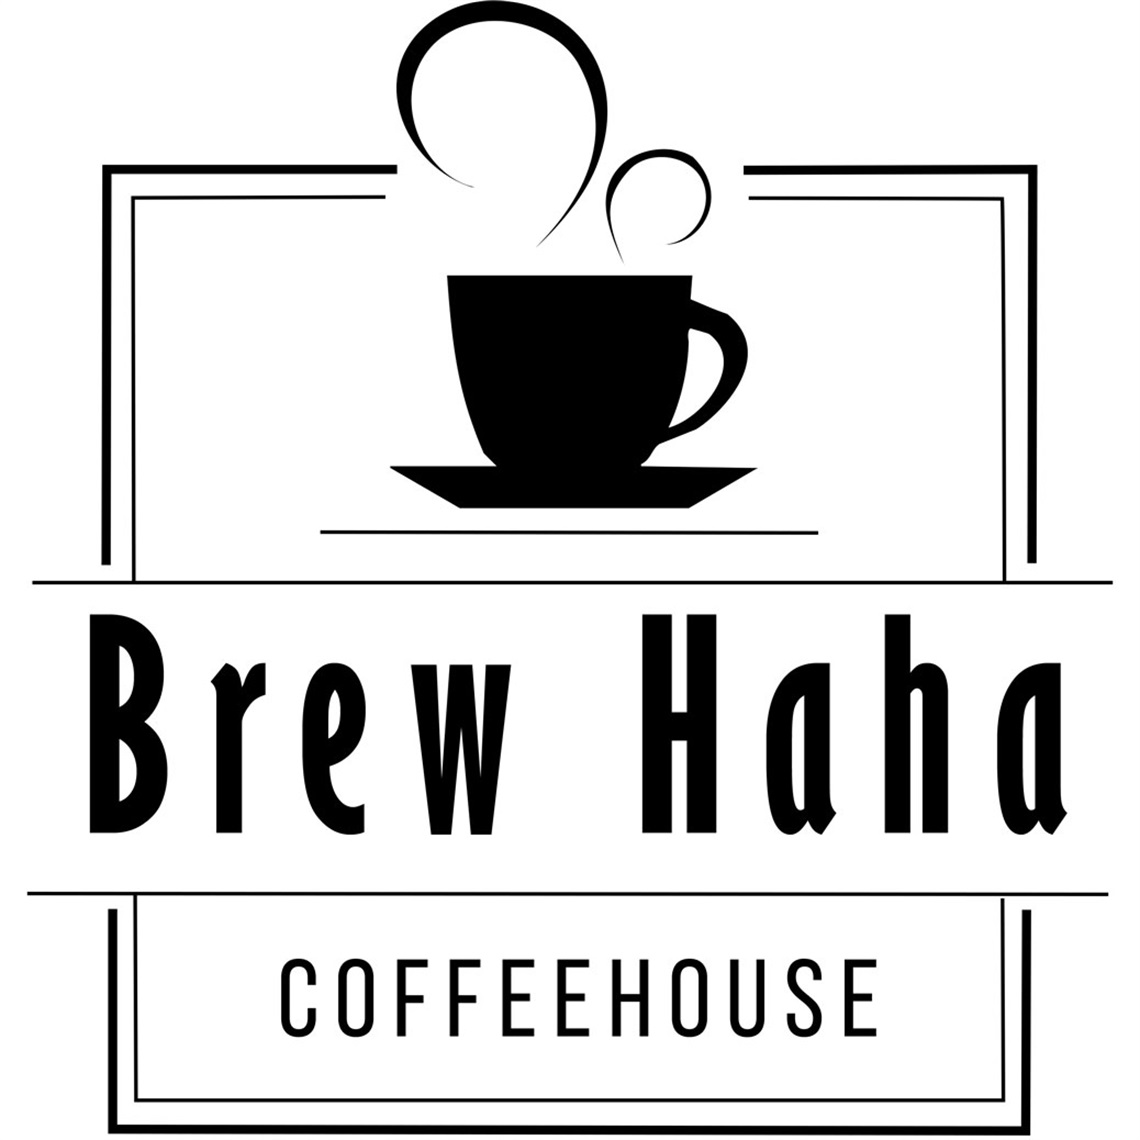 Brew Haha Coffeehouse logo